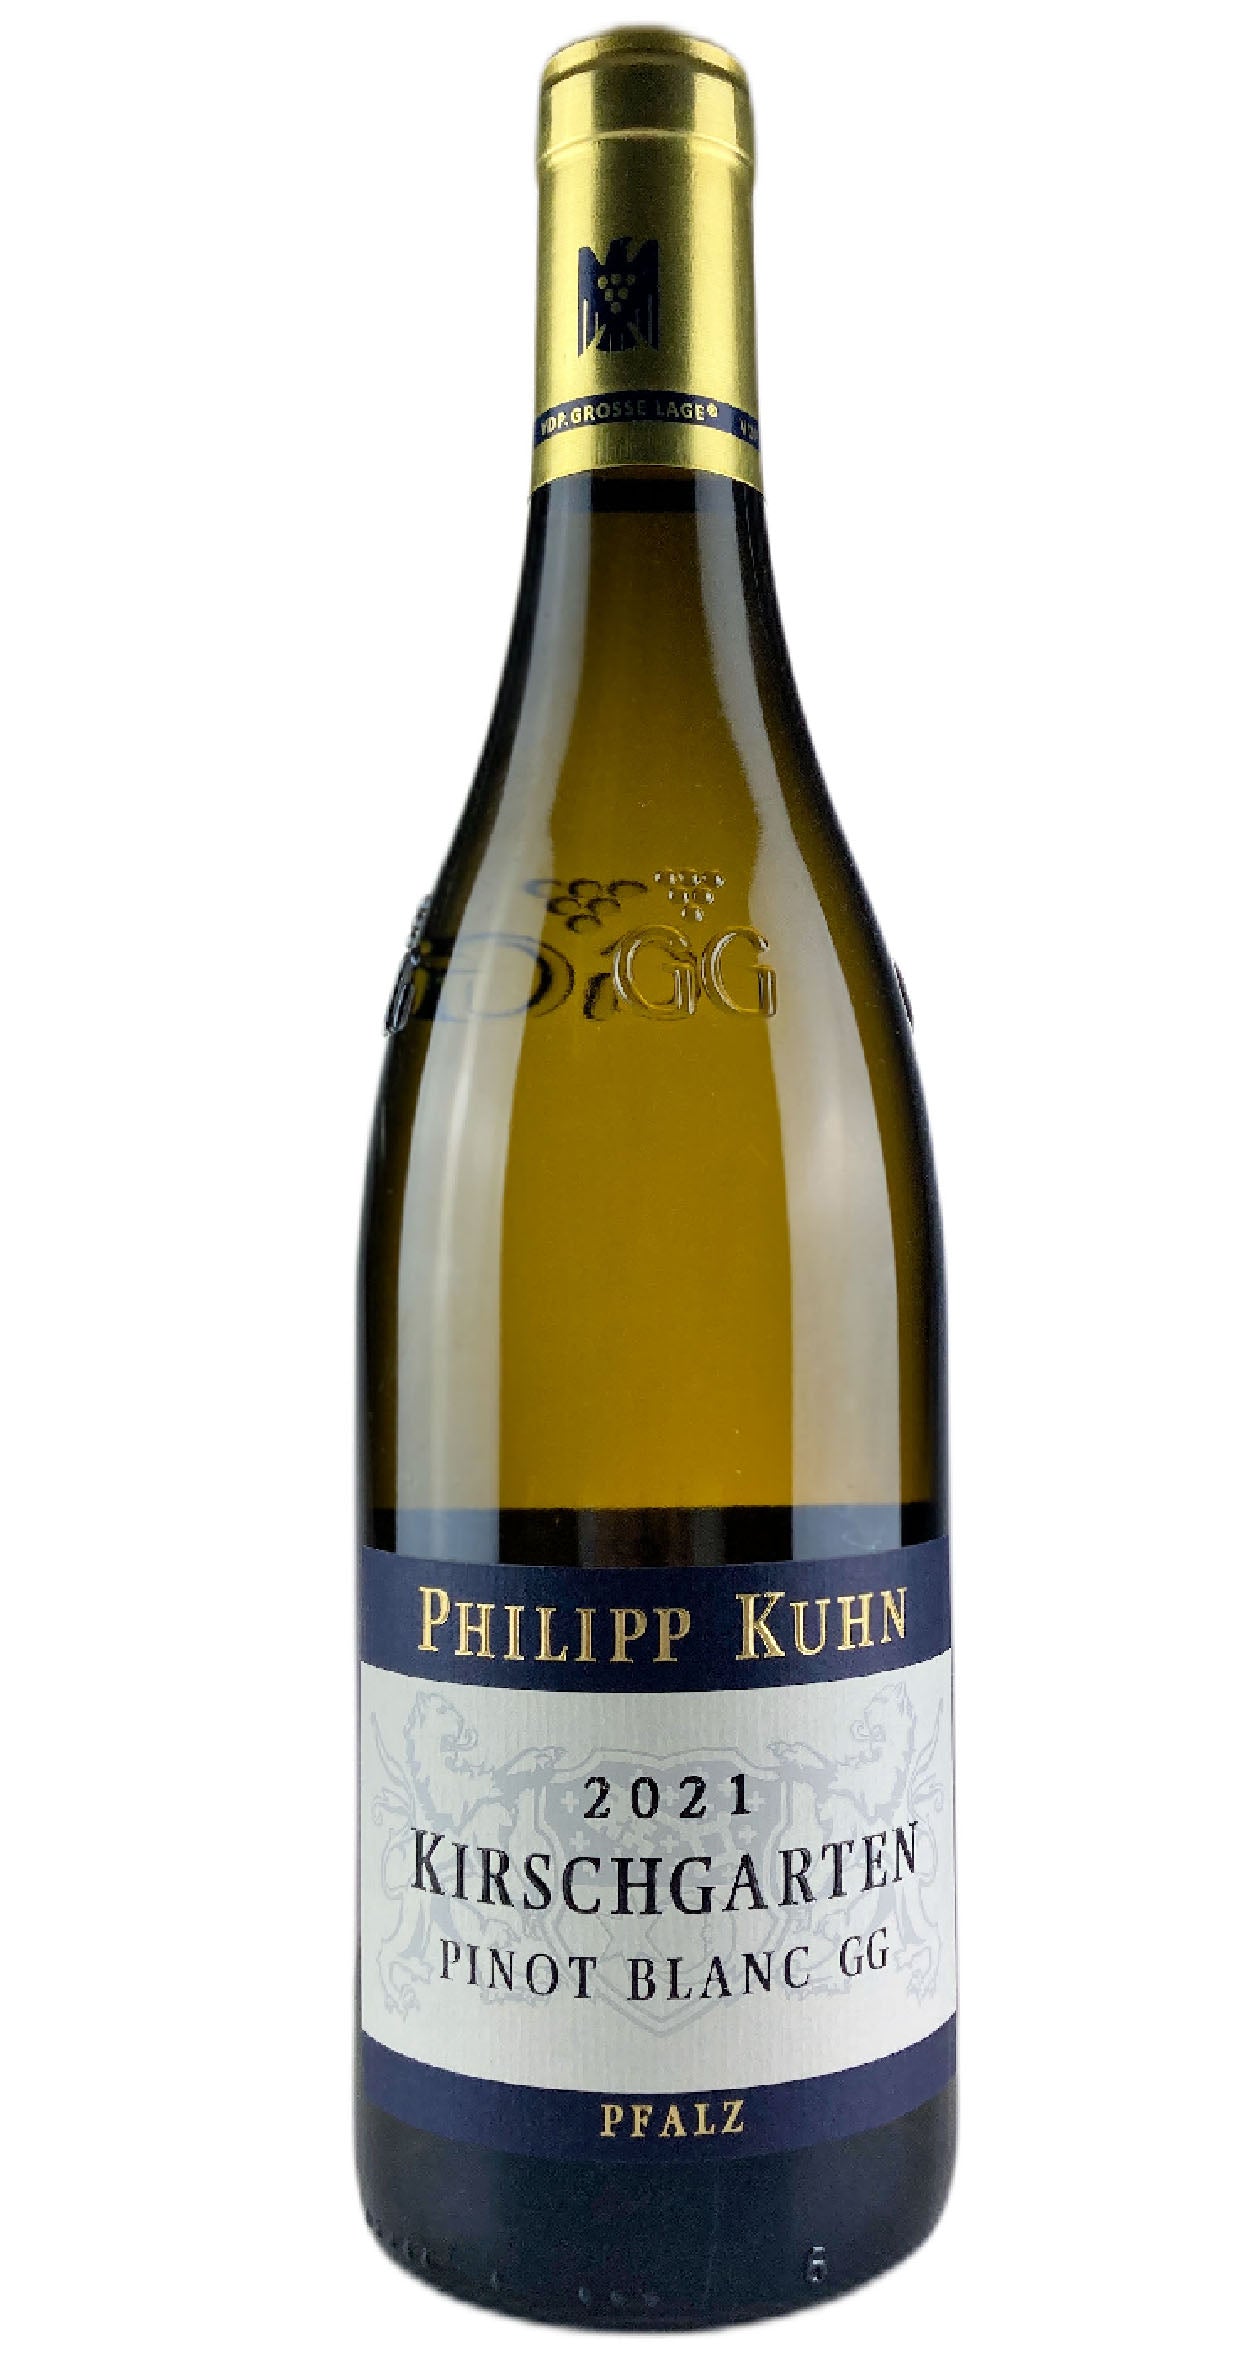 W107213 - 2021 Kirschgarten Pinot Blanc trocken GG, Philipp Kuhn